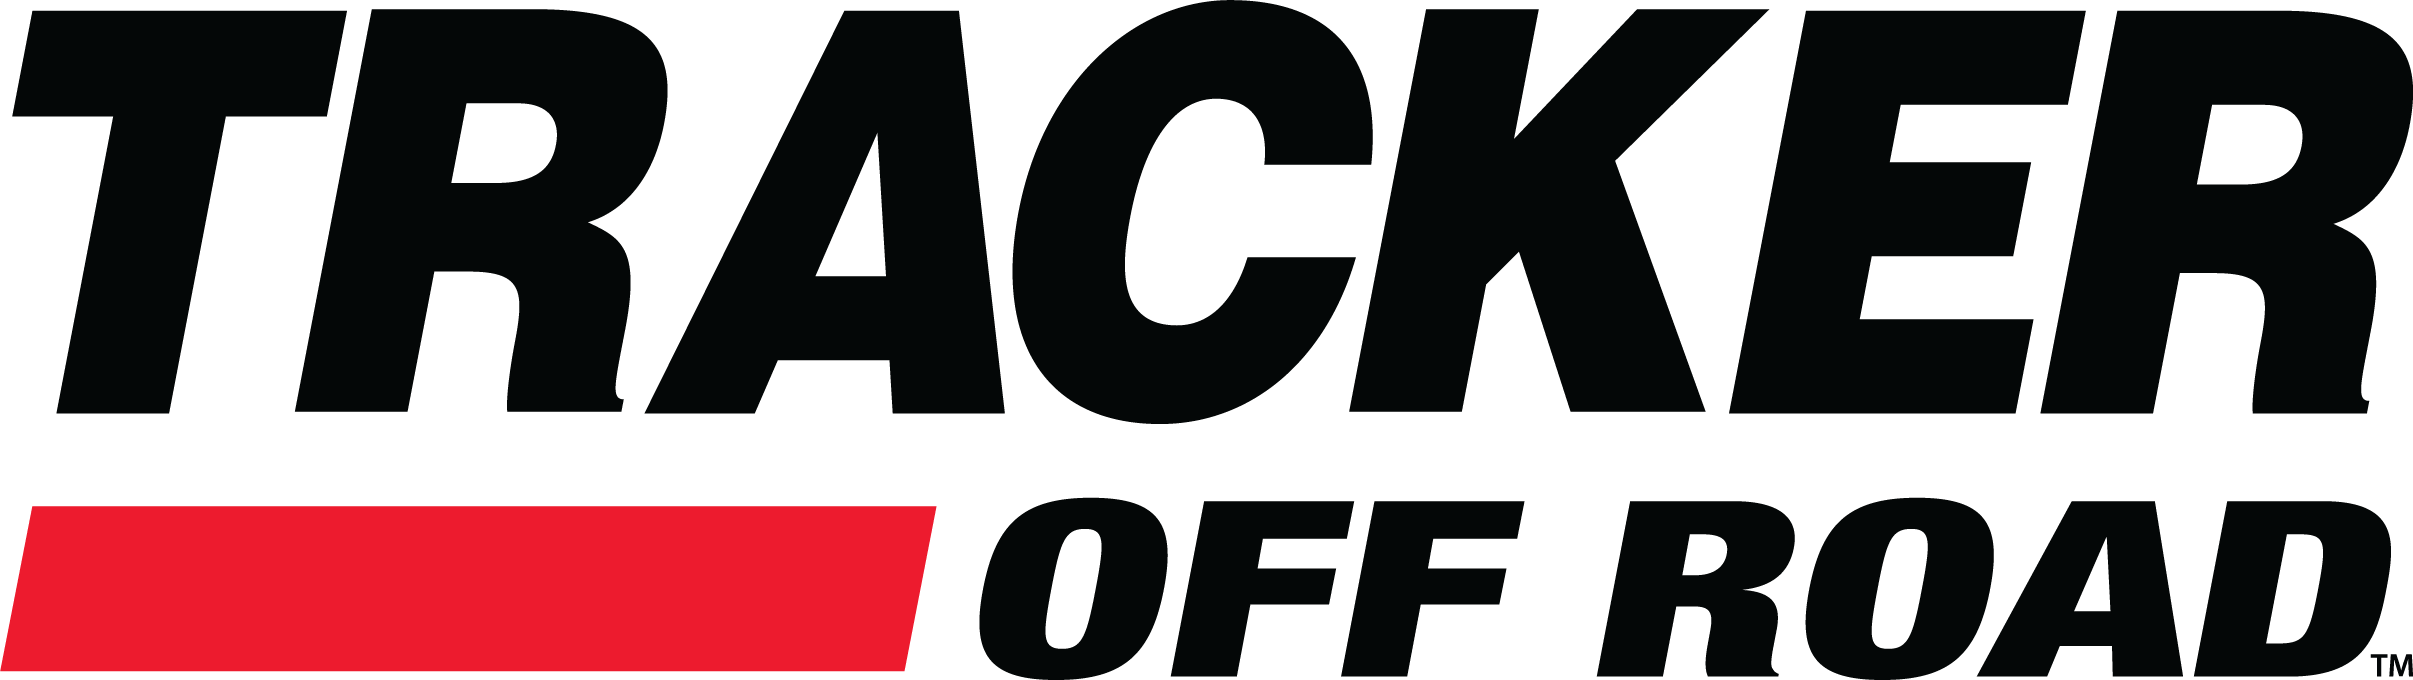 Tracker Off Road brand logo